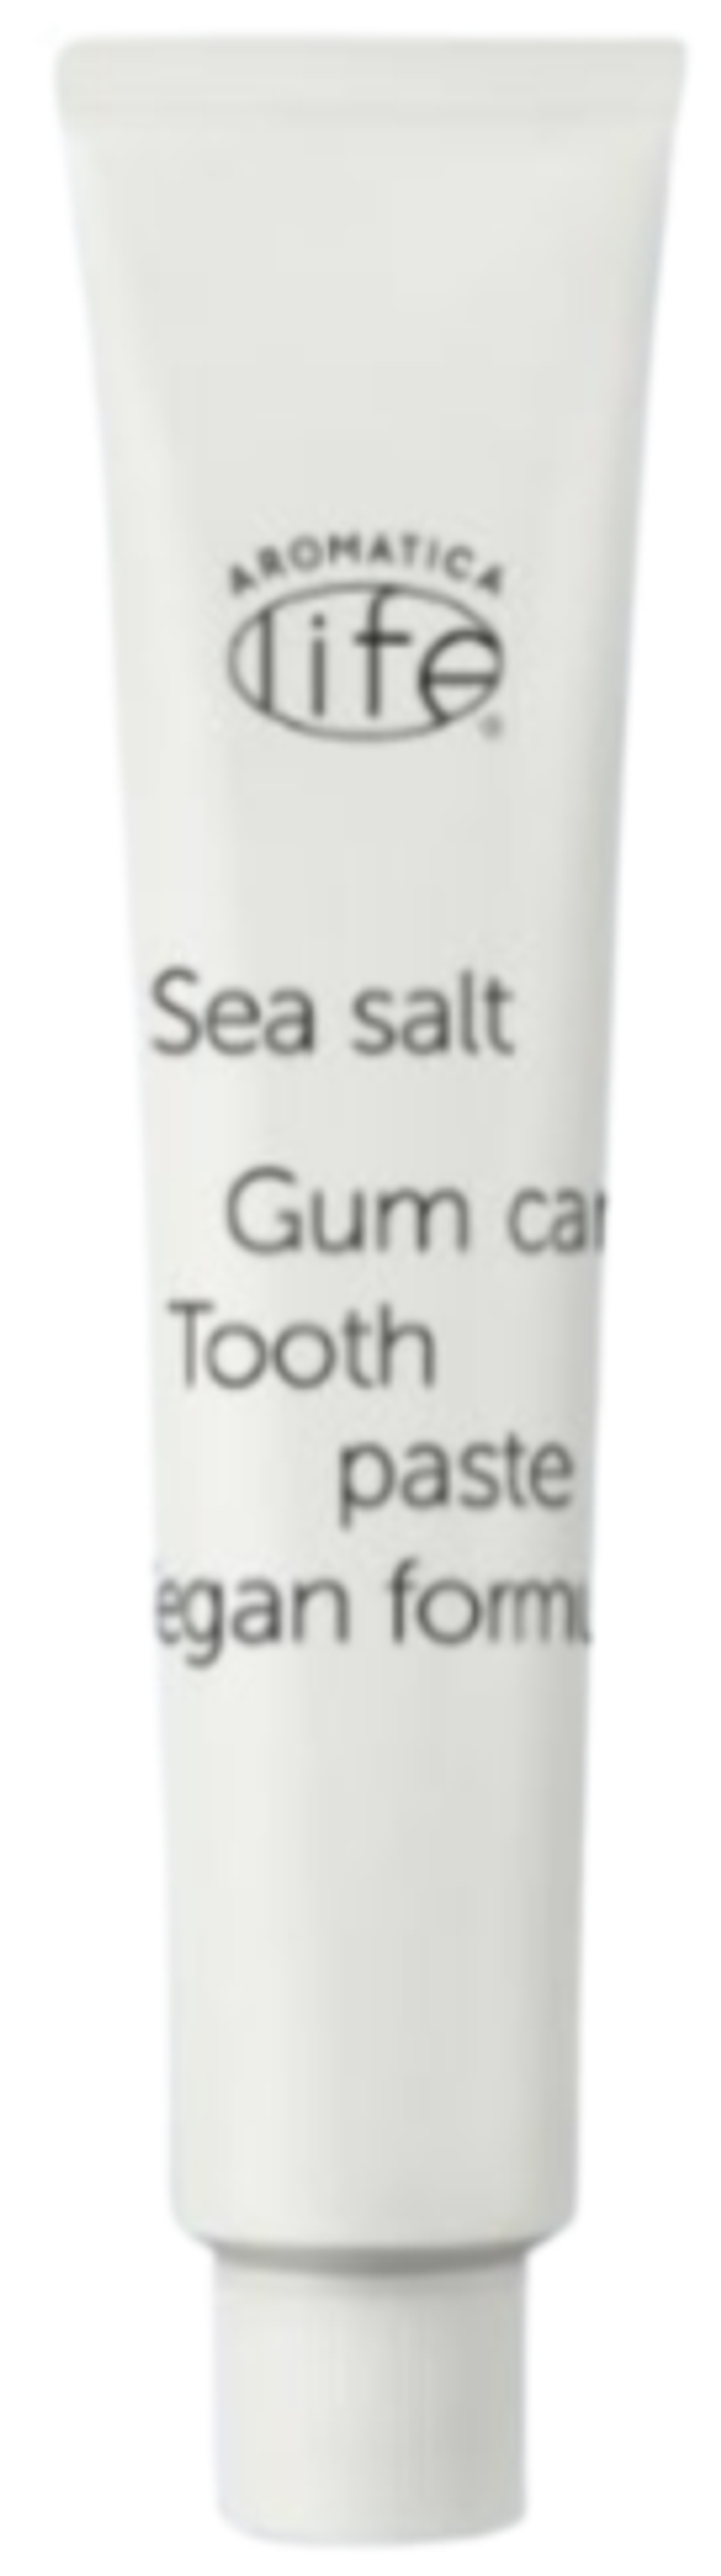 aromatica Sea Salt Gum Care Toothpaste гелевая зубная паста с морской солью 125г